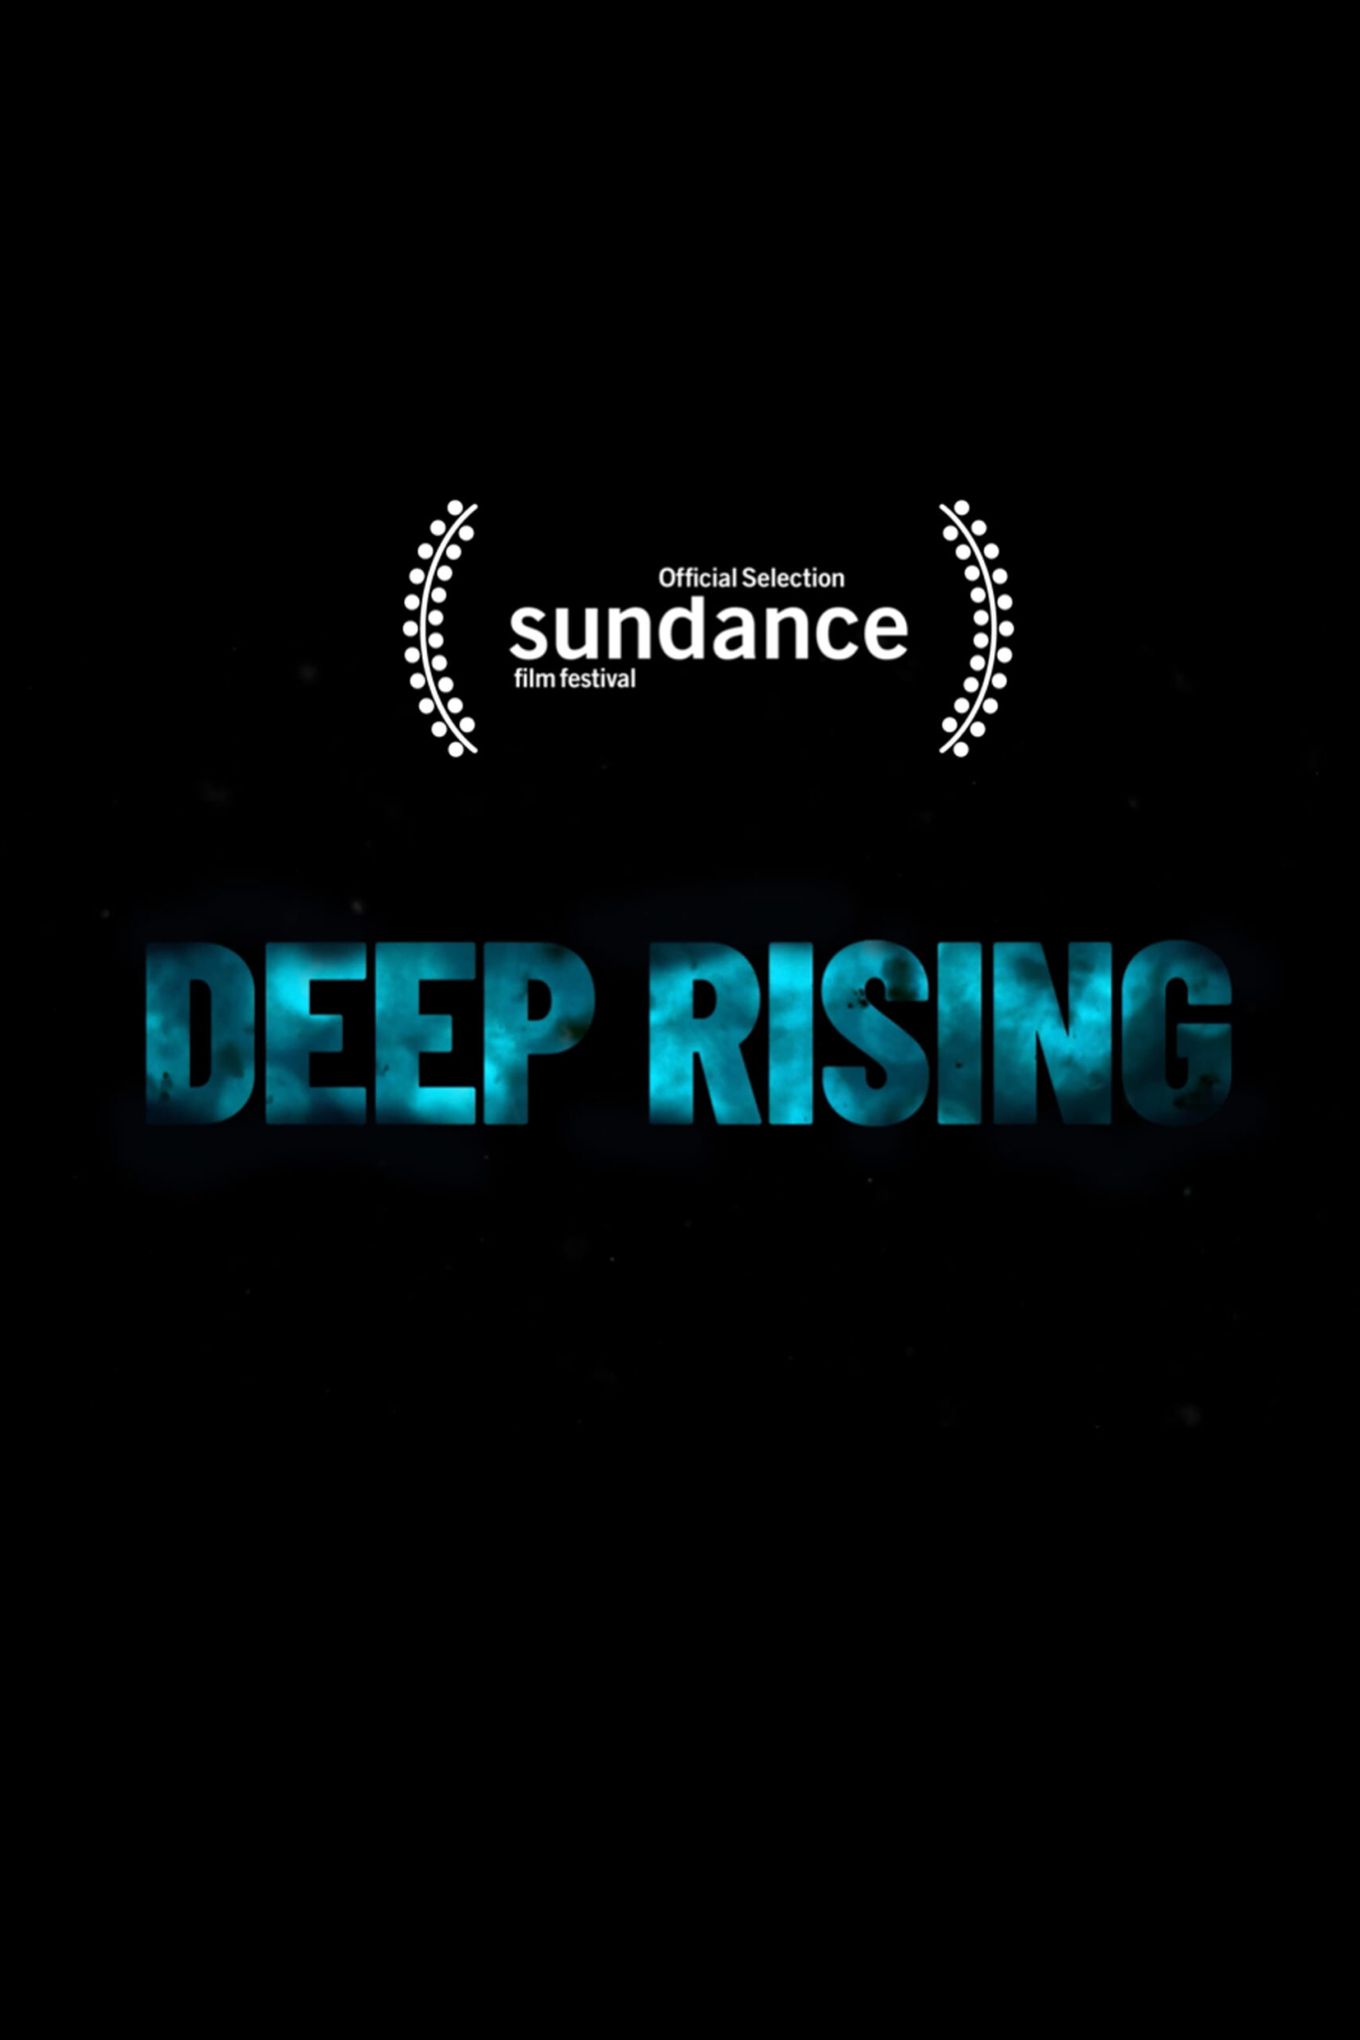 Plakat for 'Deep Rising'